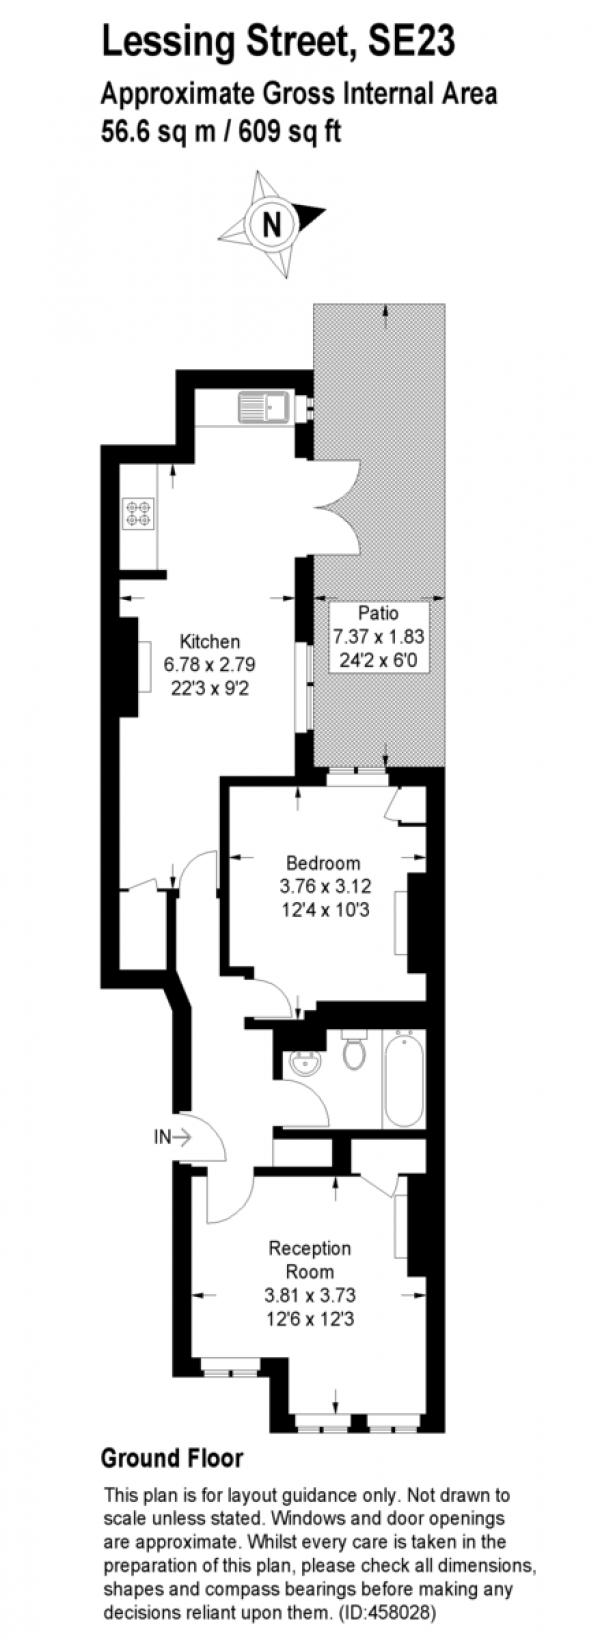 Floor Plan Image for 1 Bedroom Ground Flat for Sale in Lessing Street, Honor Oak, SE23 (JH)